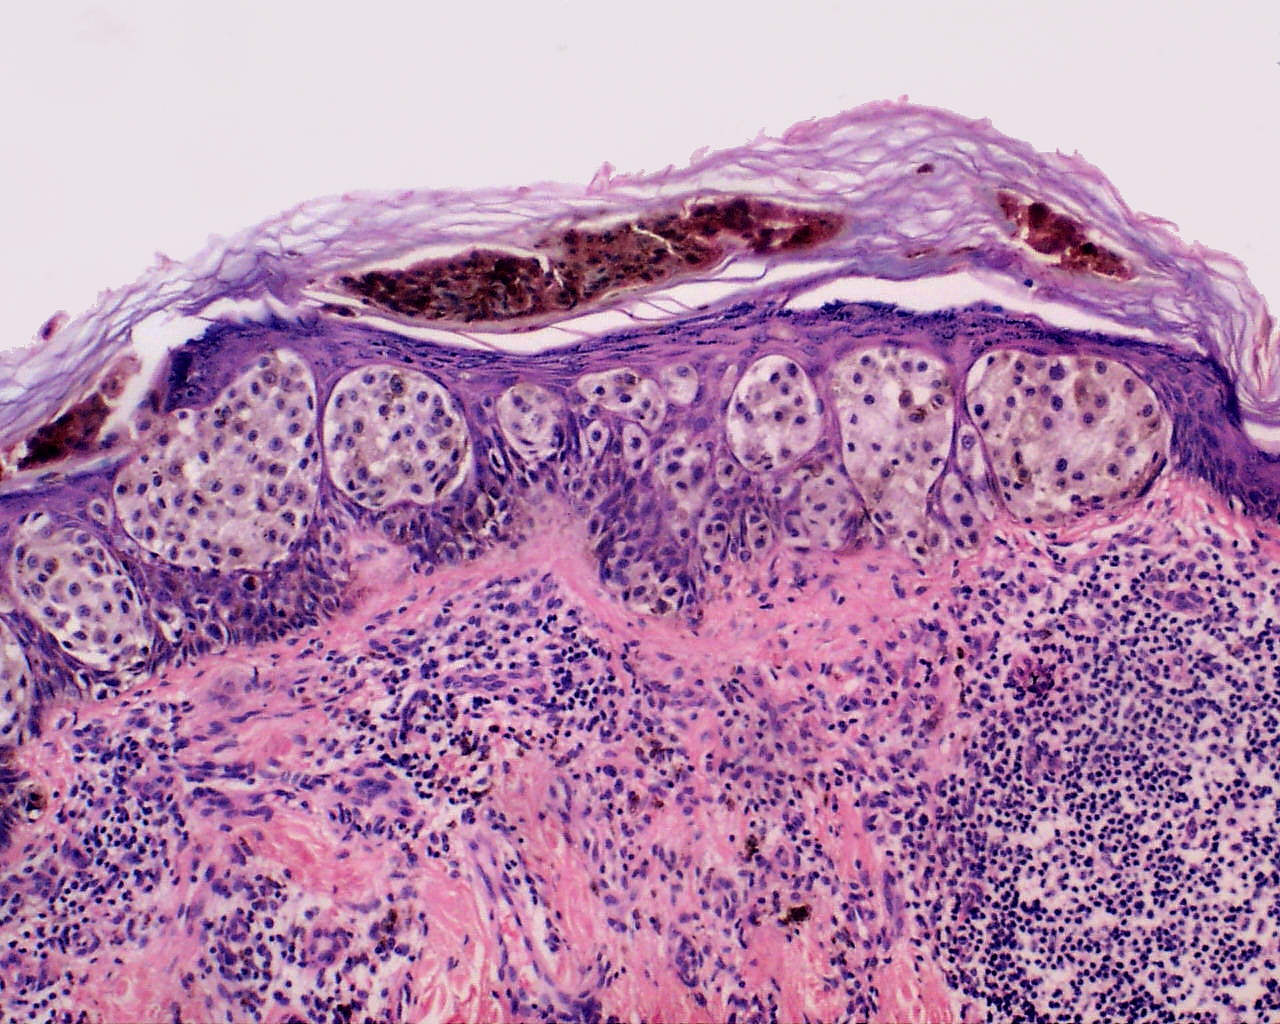 Melanoma in skin biopsy with H&E stain. Credit: Wozniak L & Zielinski KW. Own work (CC BY-SA 3.0).